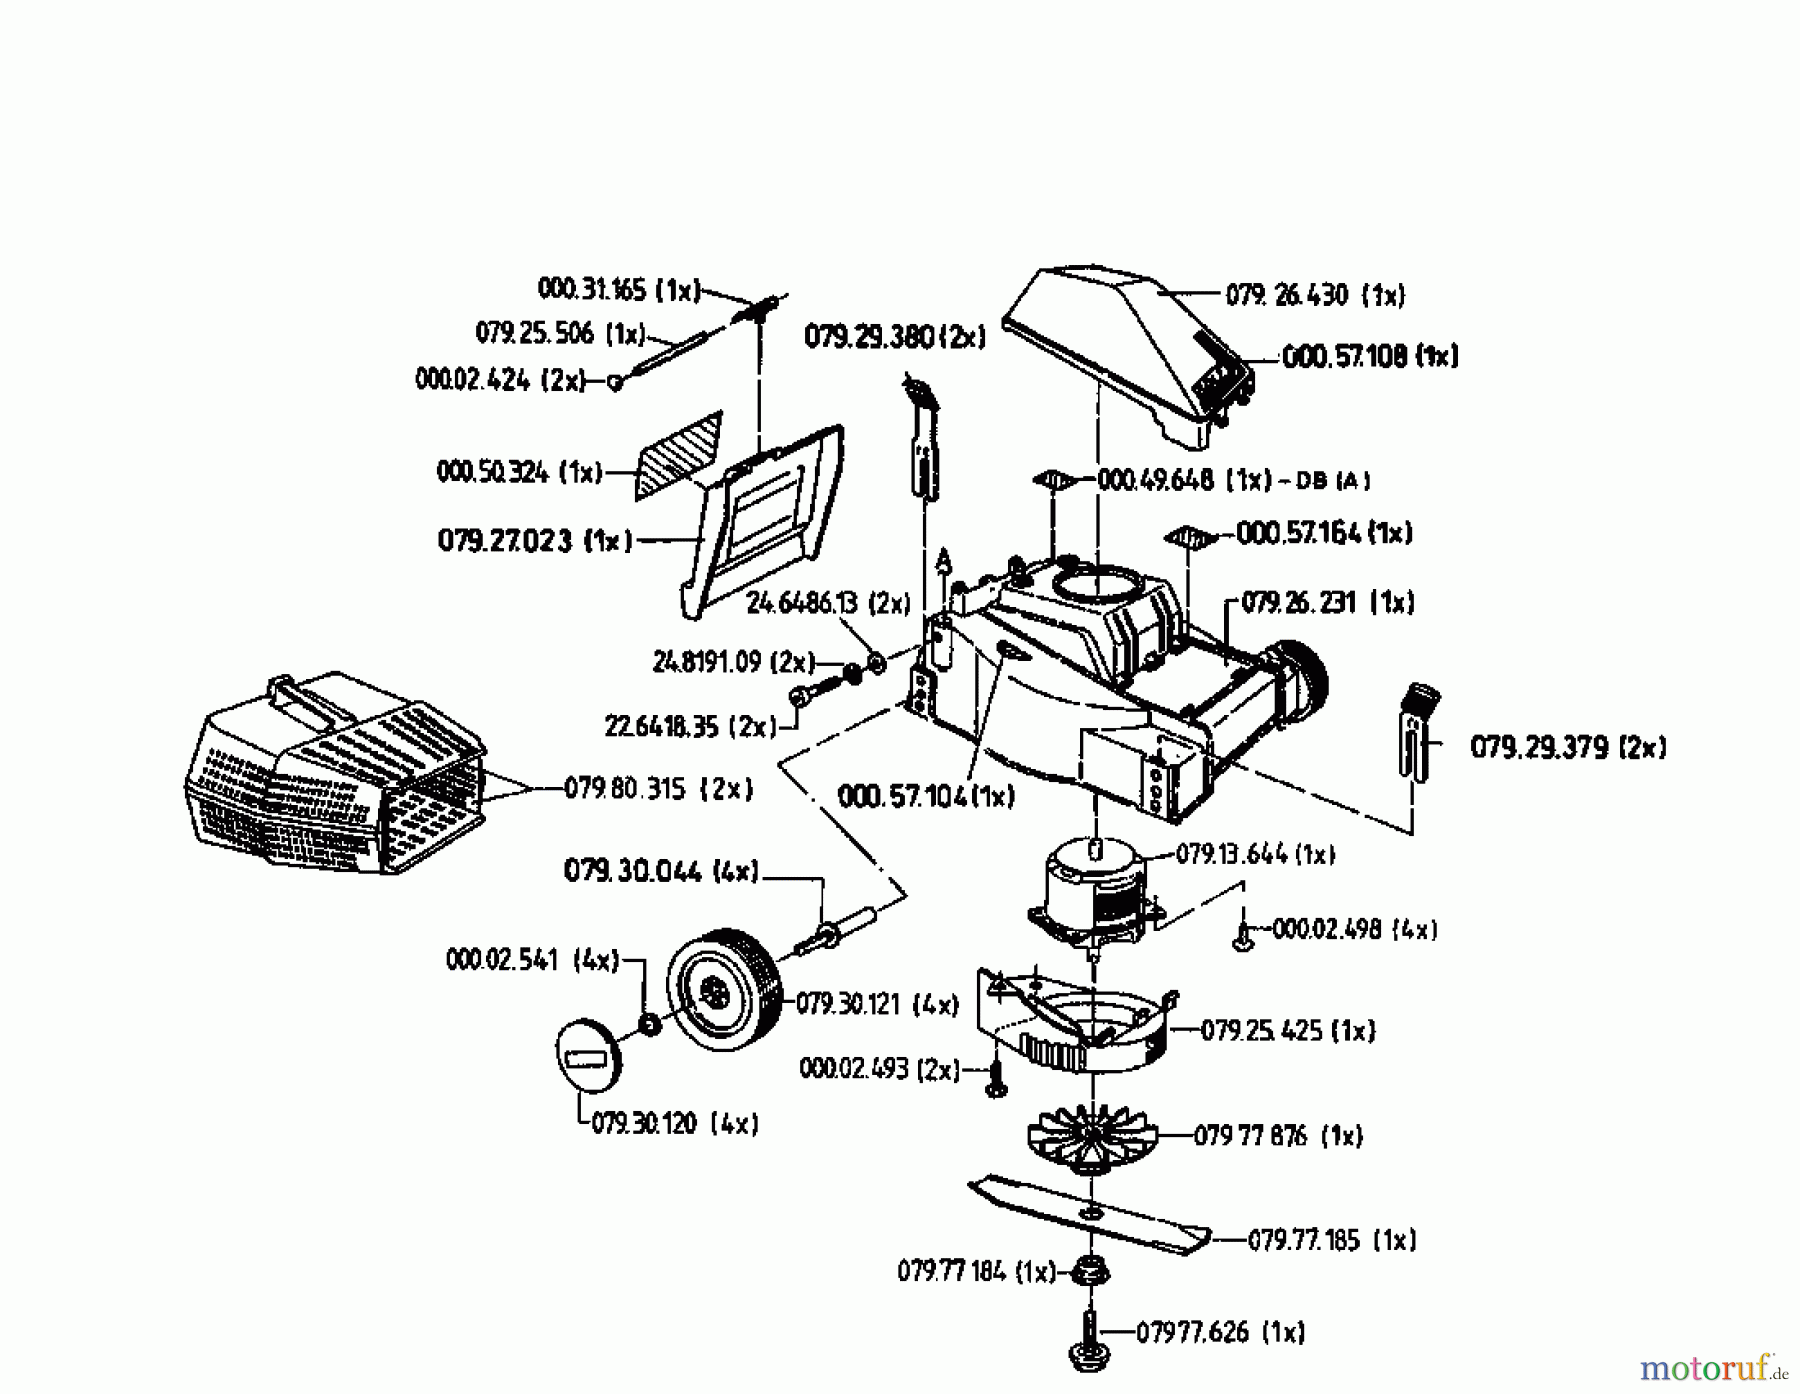  Golf Electric mower 232 HE 02823.09  (1996) Basic machine